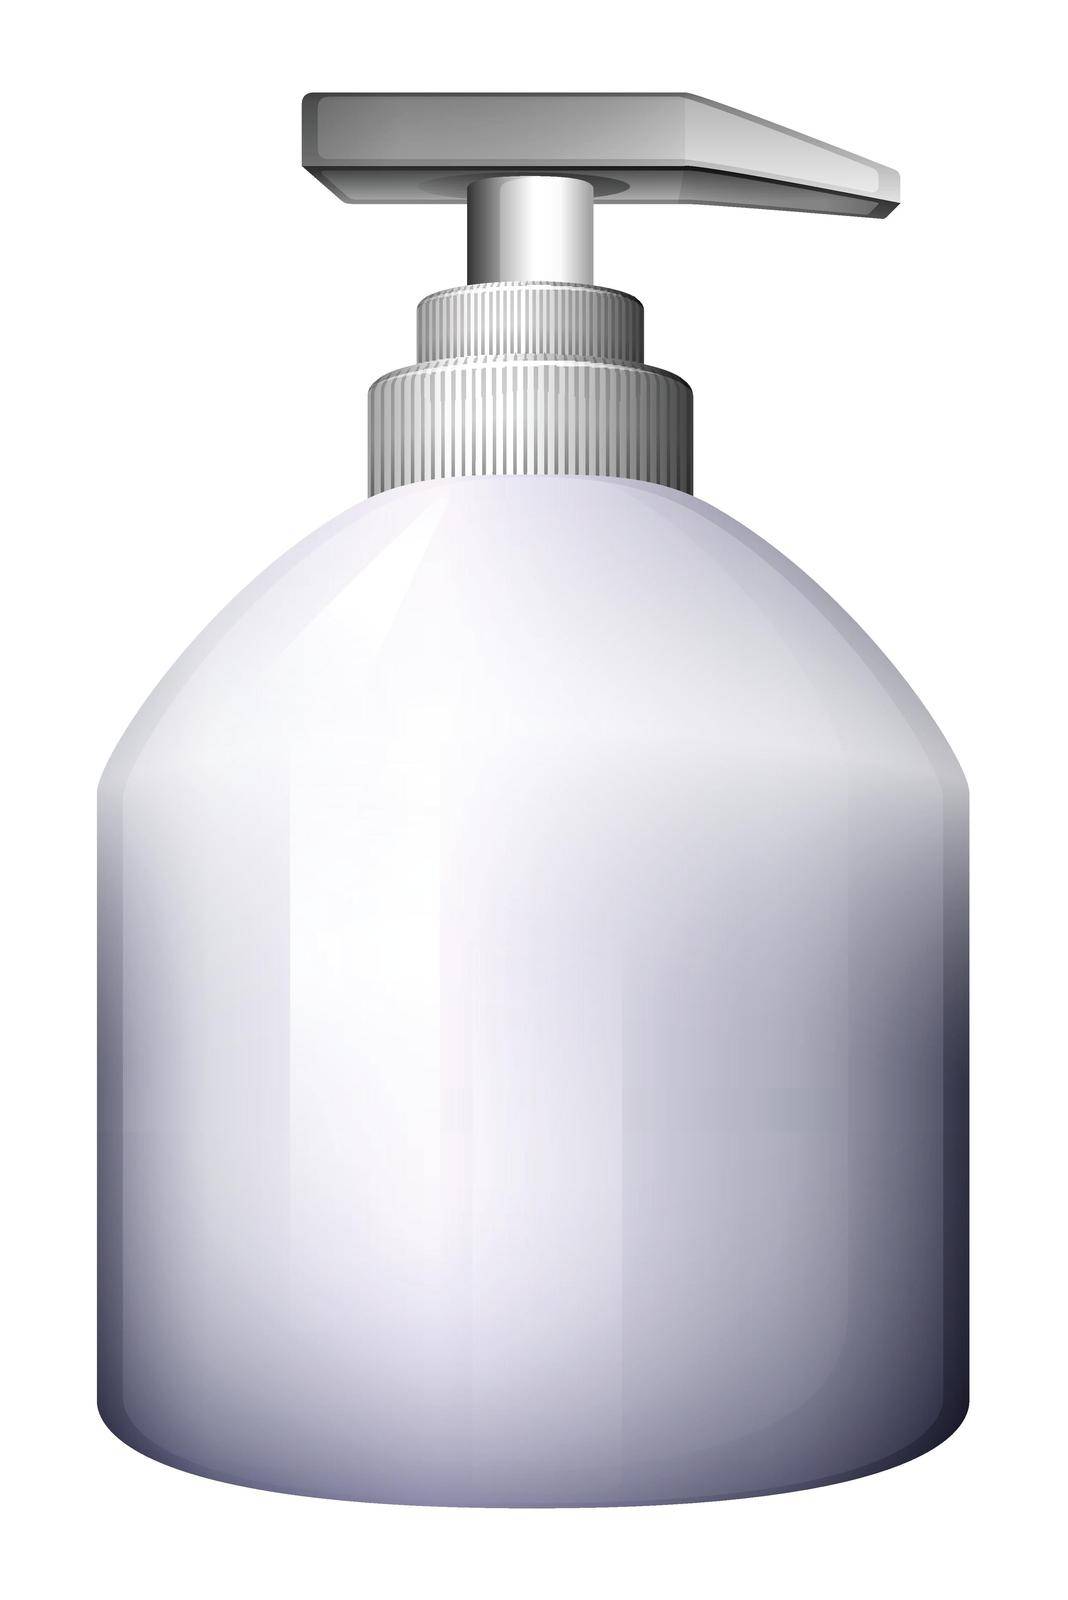 Illustration of a white spray bottle on a white background